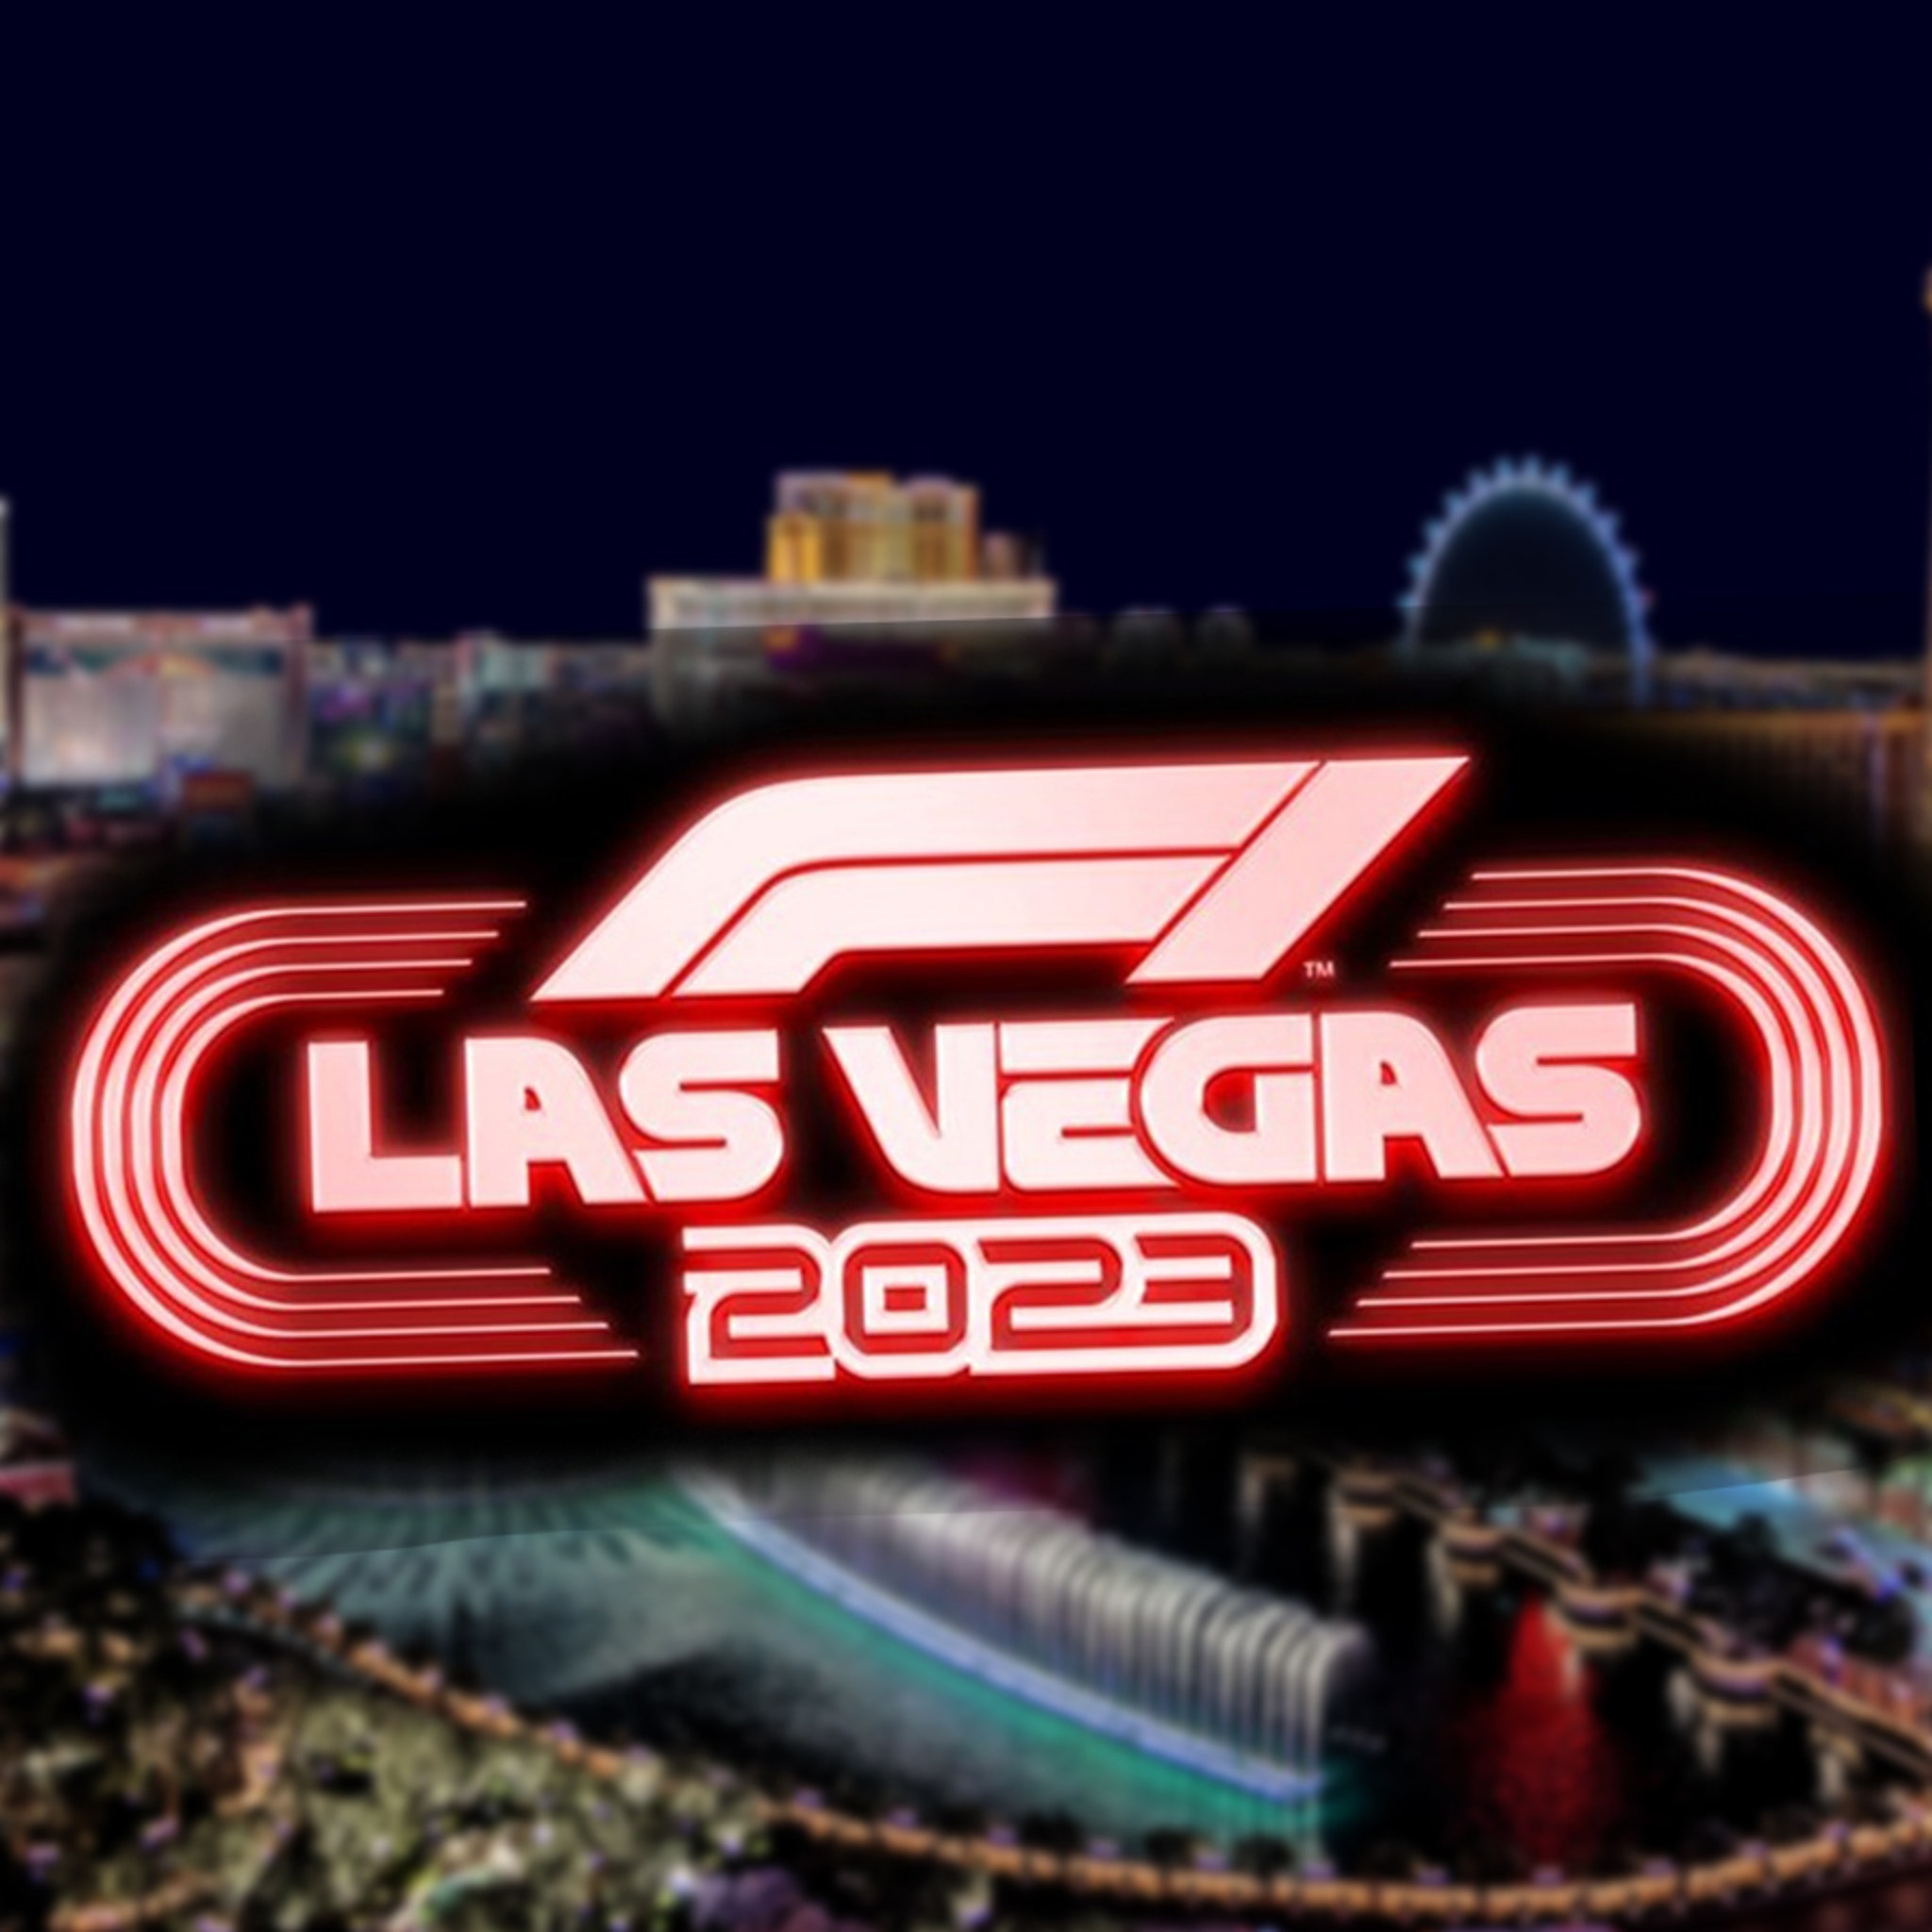 Las Vegas Formula 1 Logo